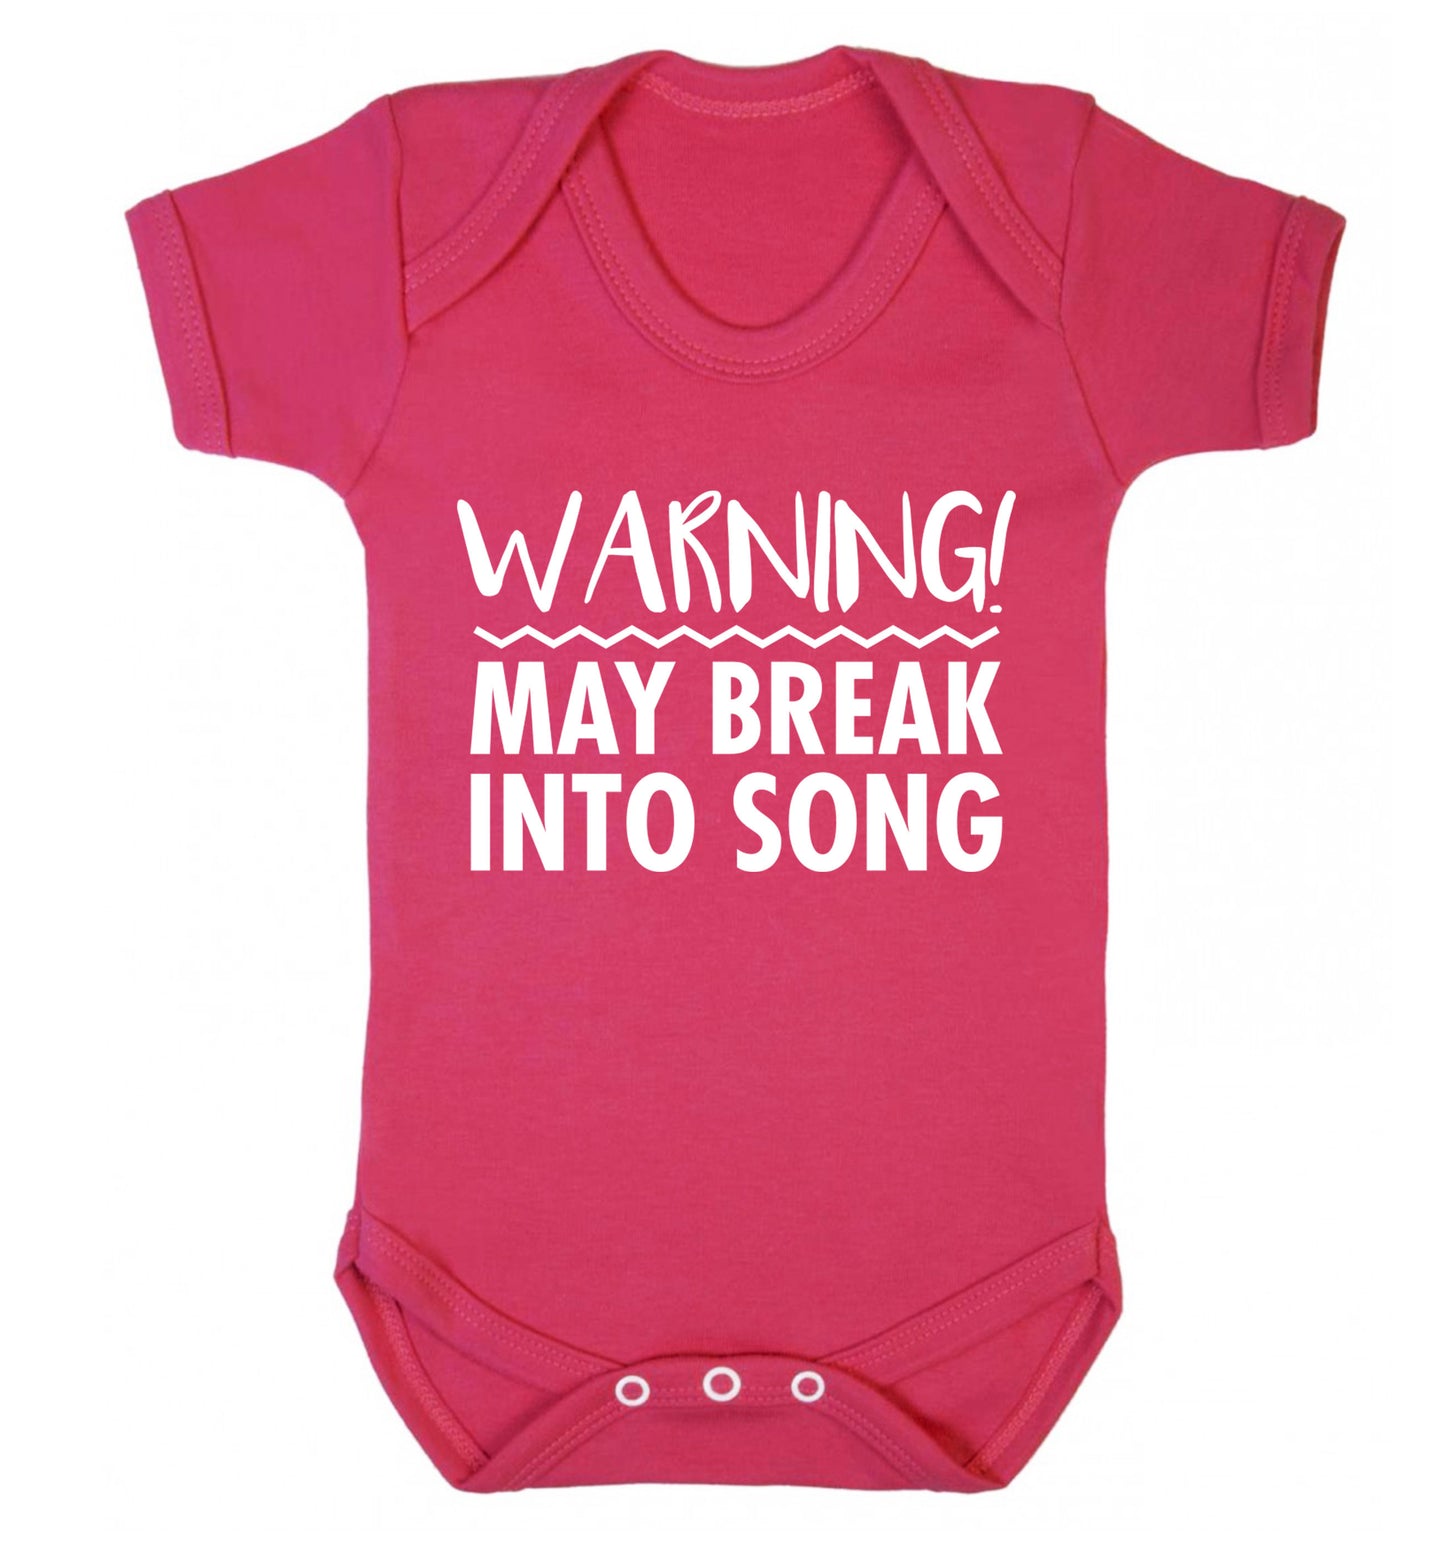 Warning may break into song Baby Vest dark pink 18-24 months